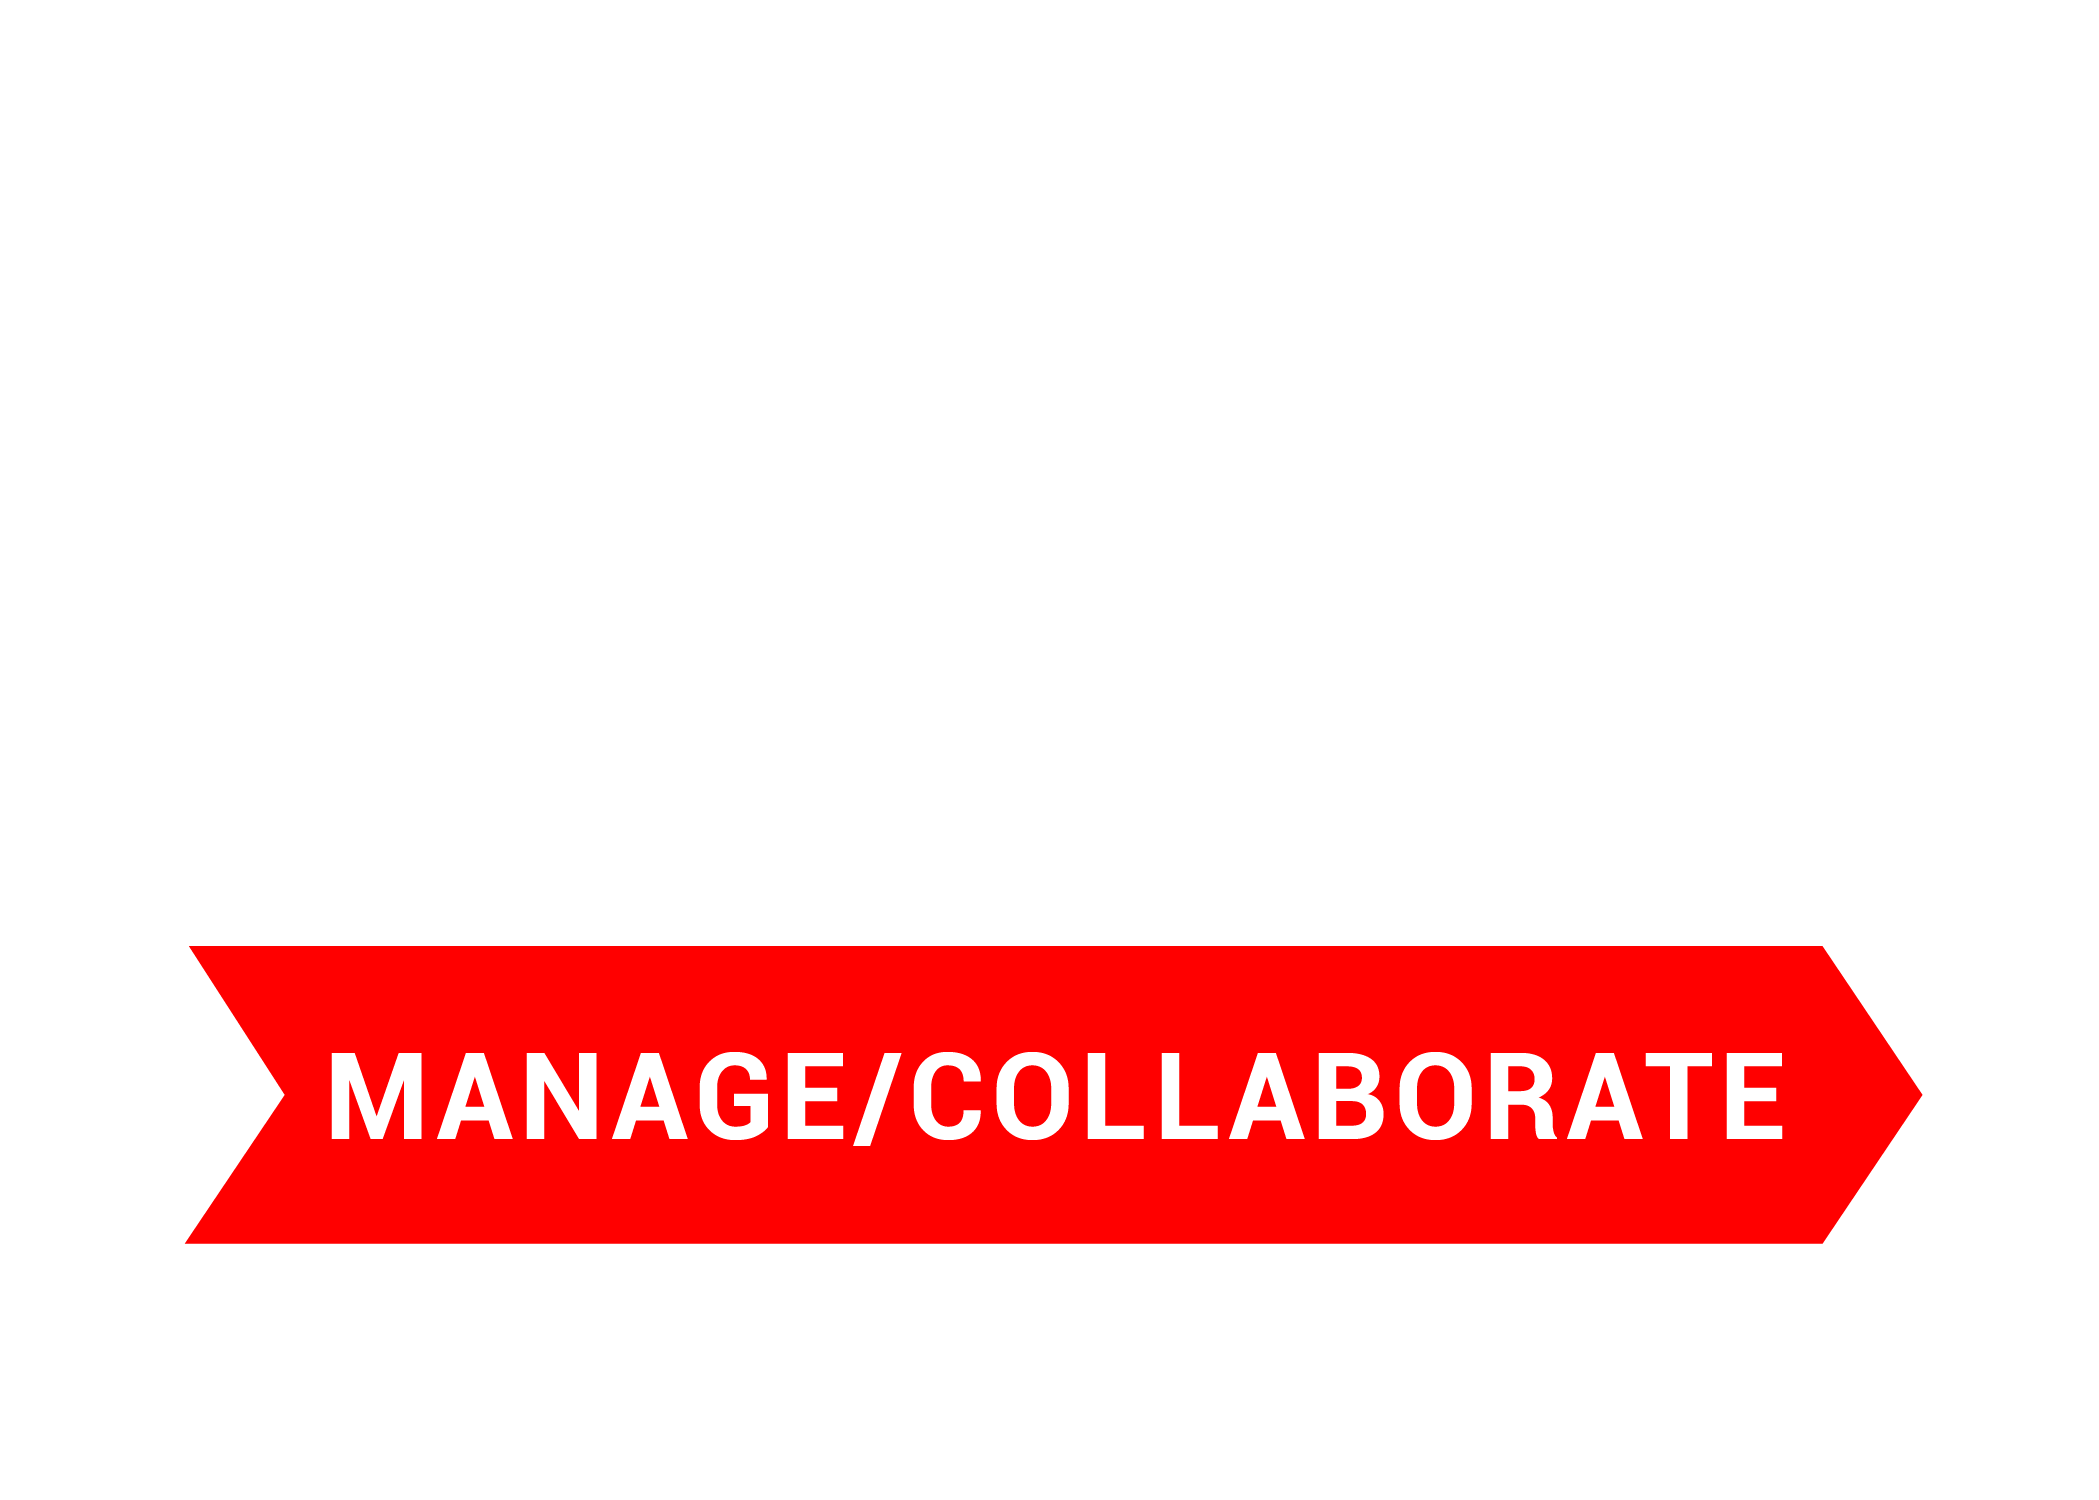 Manage/collaborate icon